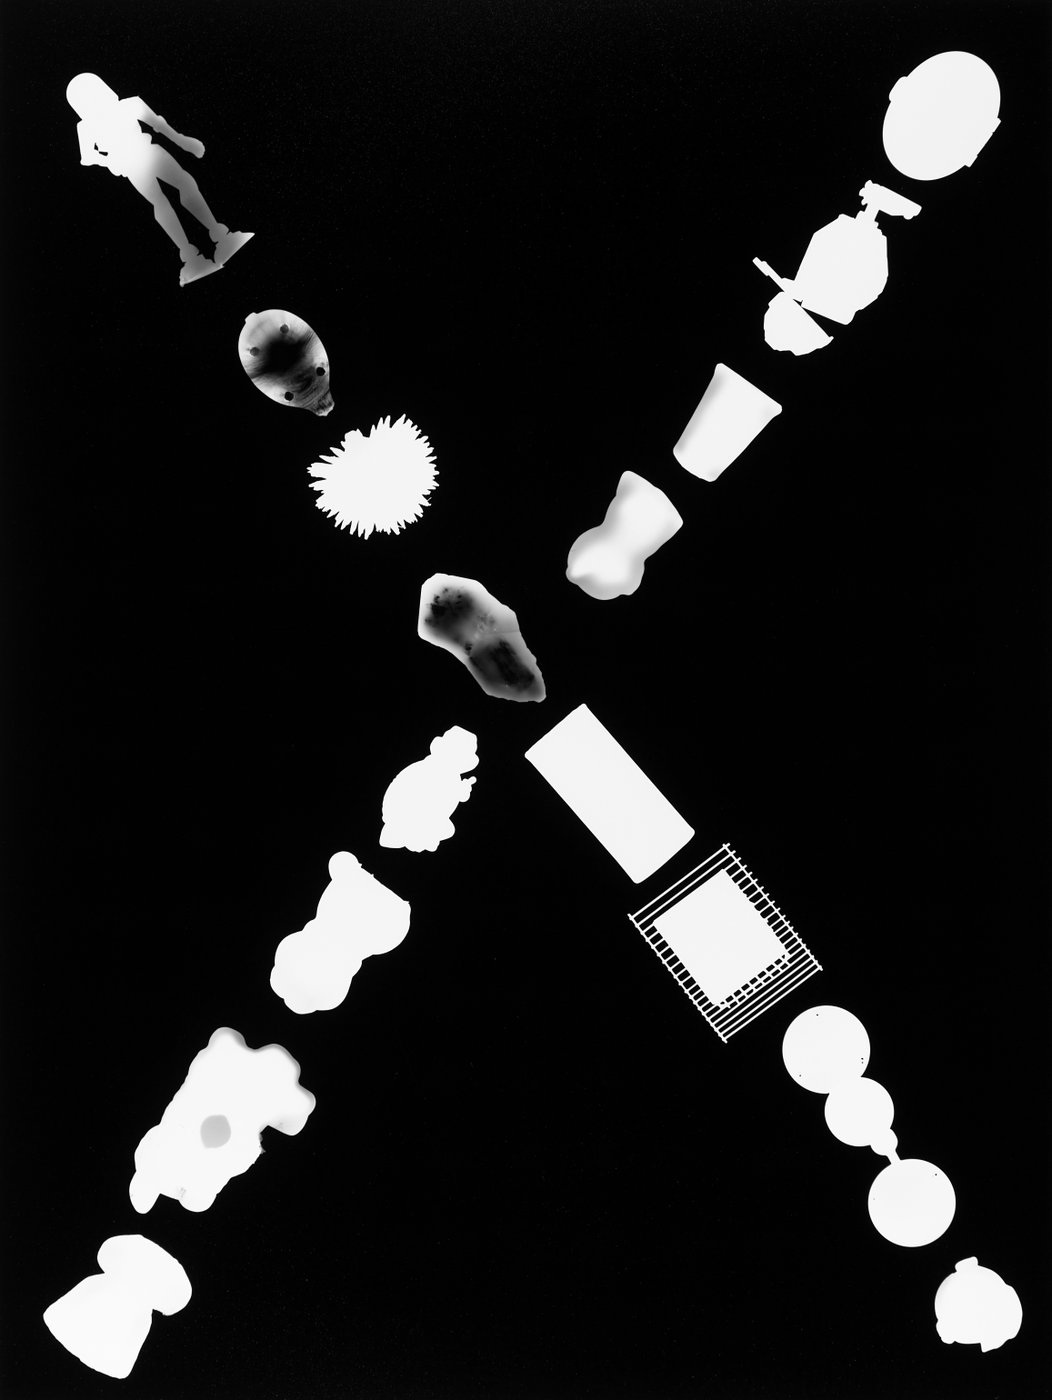 Photogram: Cross of objects on black photo paperm